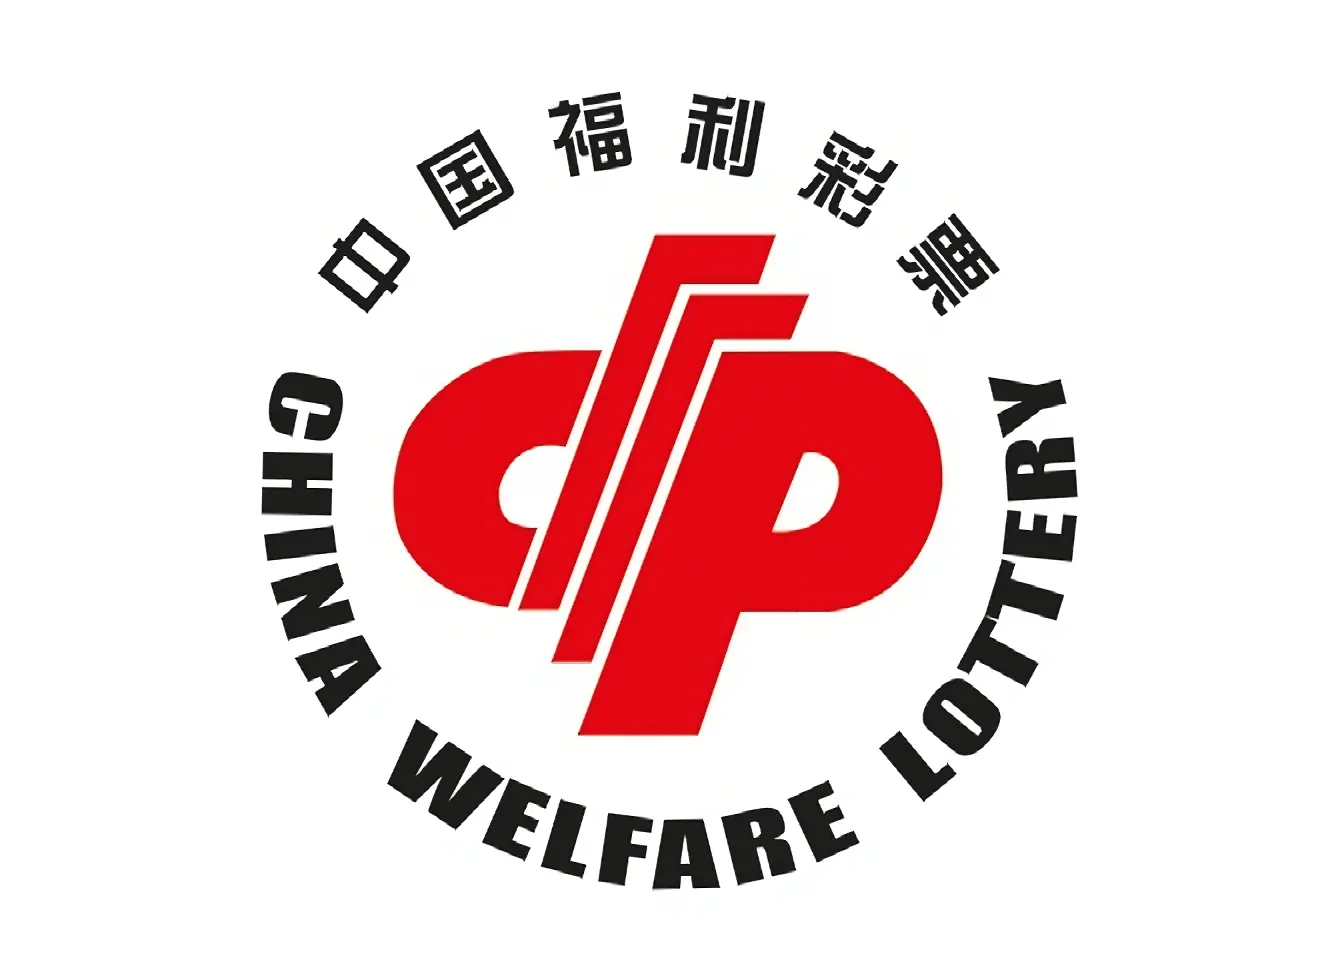 Cele mai populare 12 loterii din lume. China Welfare Lottery